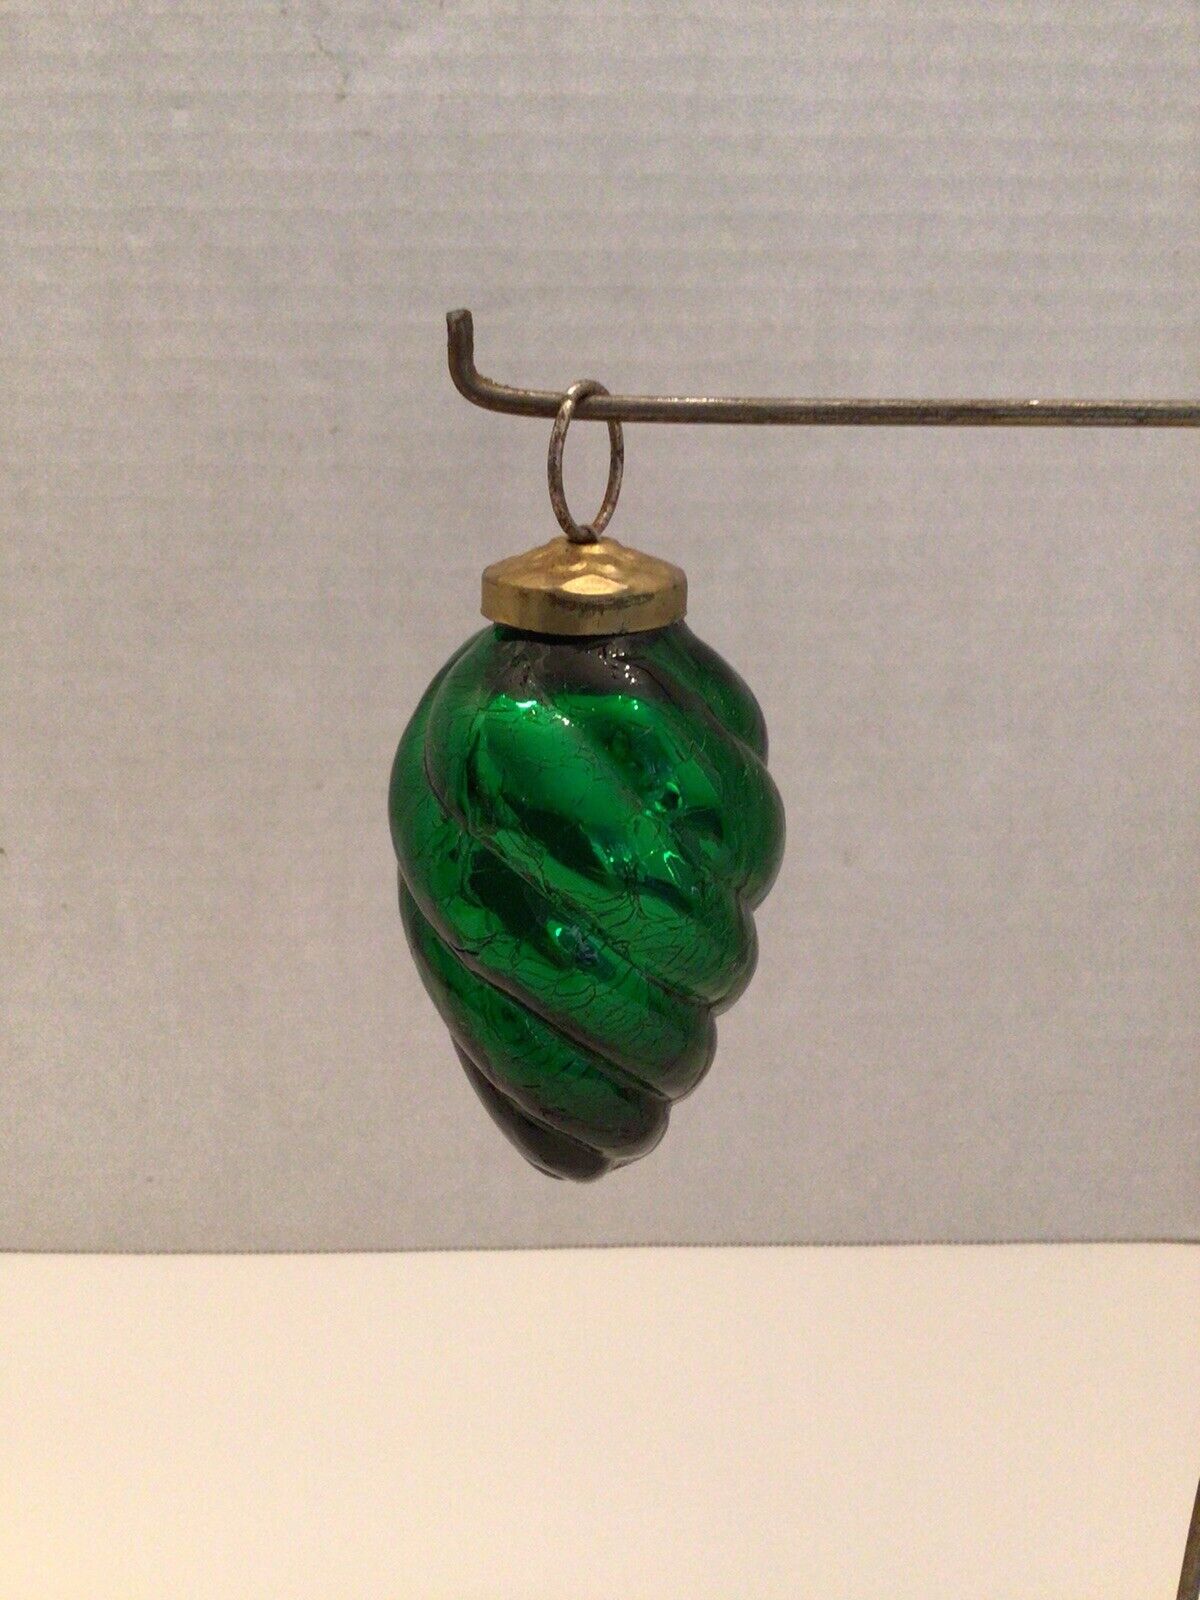 Kugel Mercury Glass 1900 Green Swirl Crackle Antique Christmas Ornament 3.75”